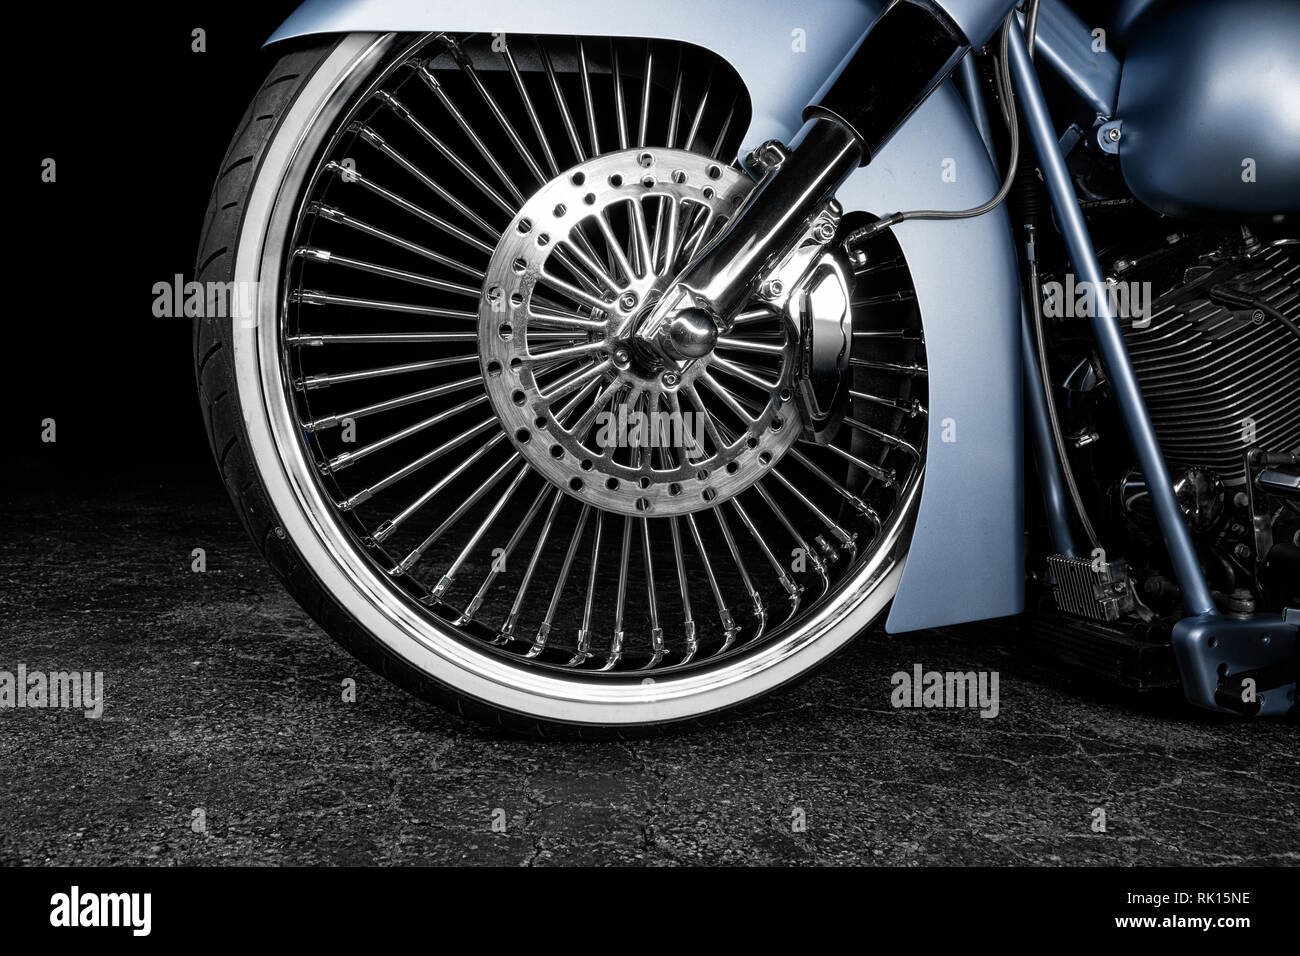 Big Wheel Bagger Harley Davidson Stock Photo